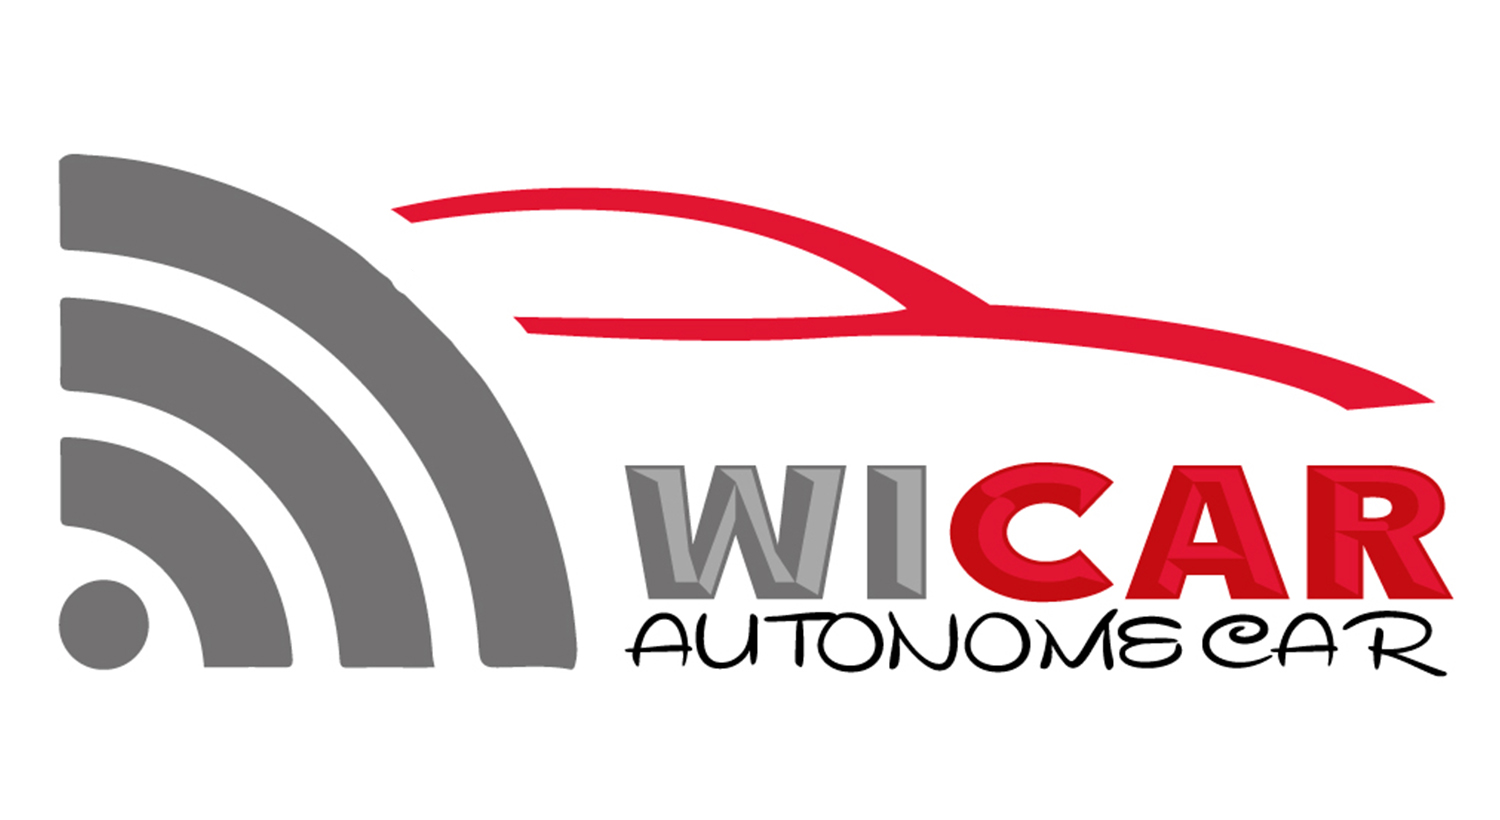 Daily Logo Challenge – Wi Car Autonome Car